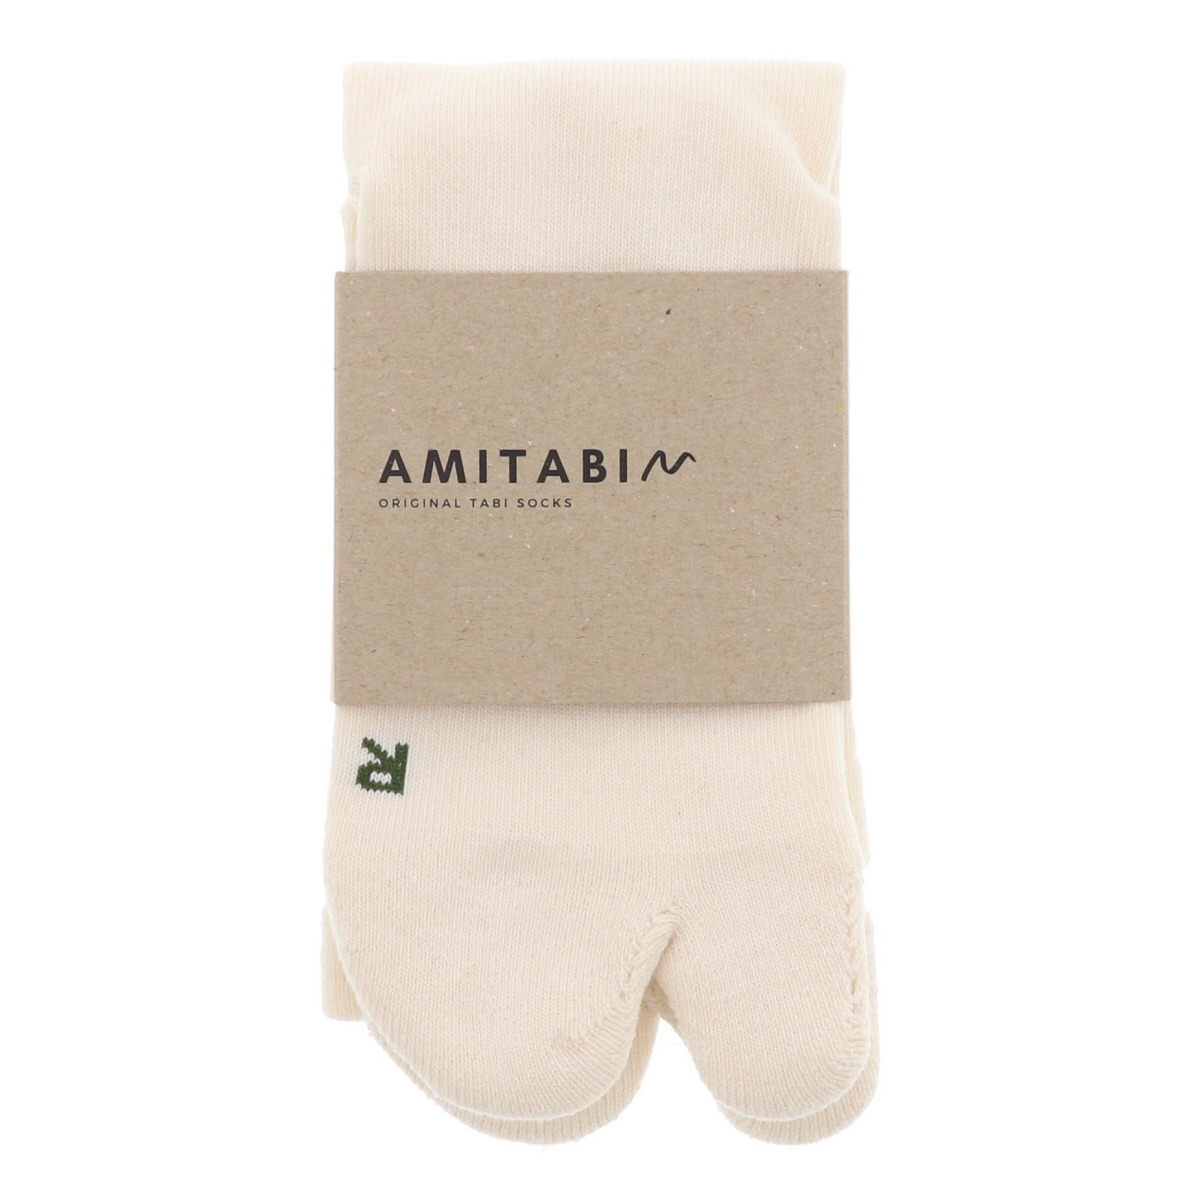 AMITABI アミタビソックス ベーシック AT0002 メンズ ソックス 靴下 足袋 たび 新色...